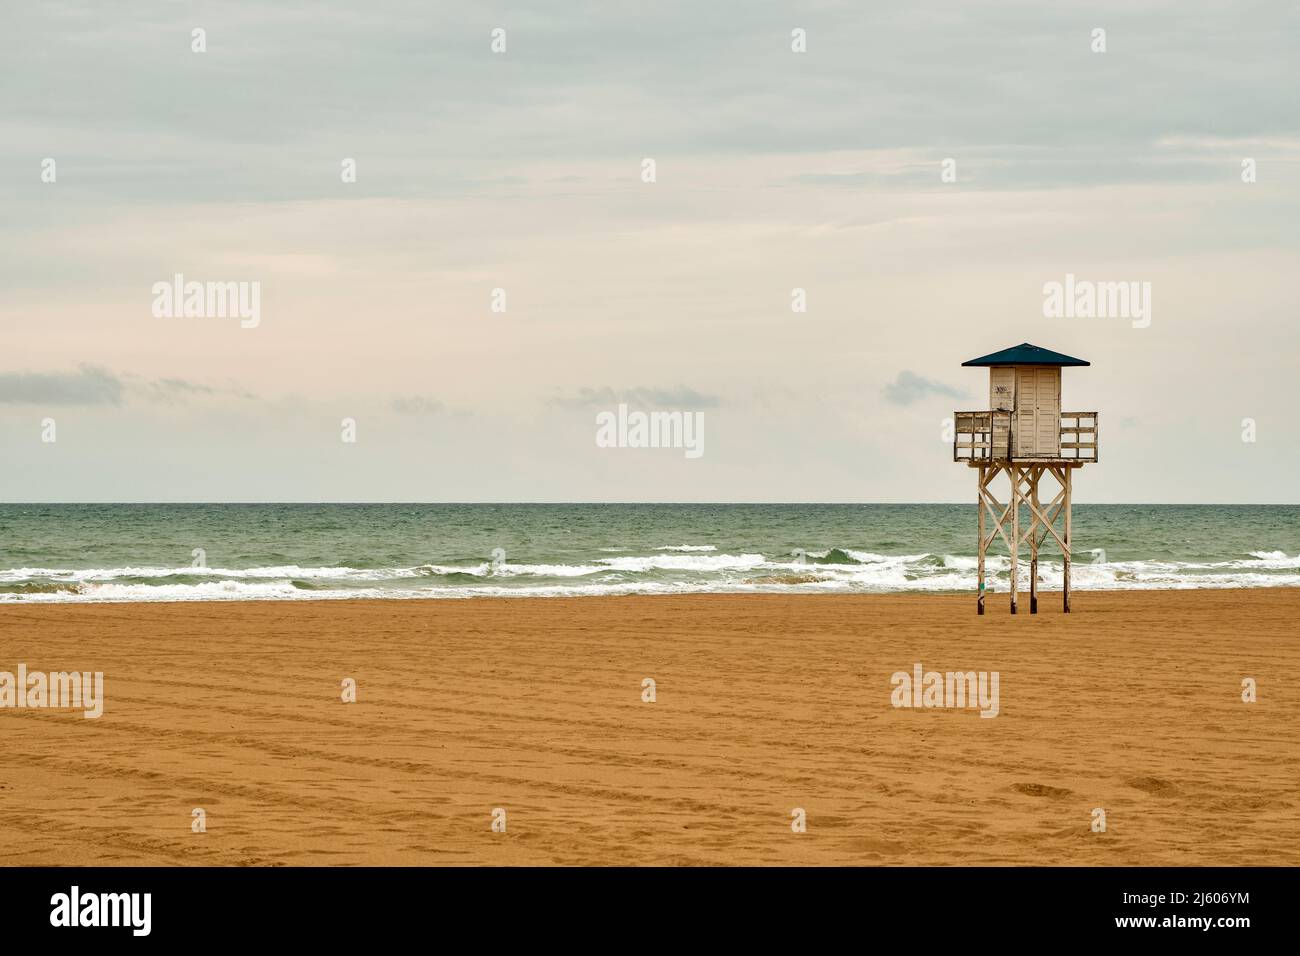 Playa De L'Ahuir, Gandia, Costa Blanca, Valencia, Spain, Europe Stock Photo